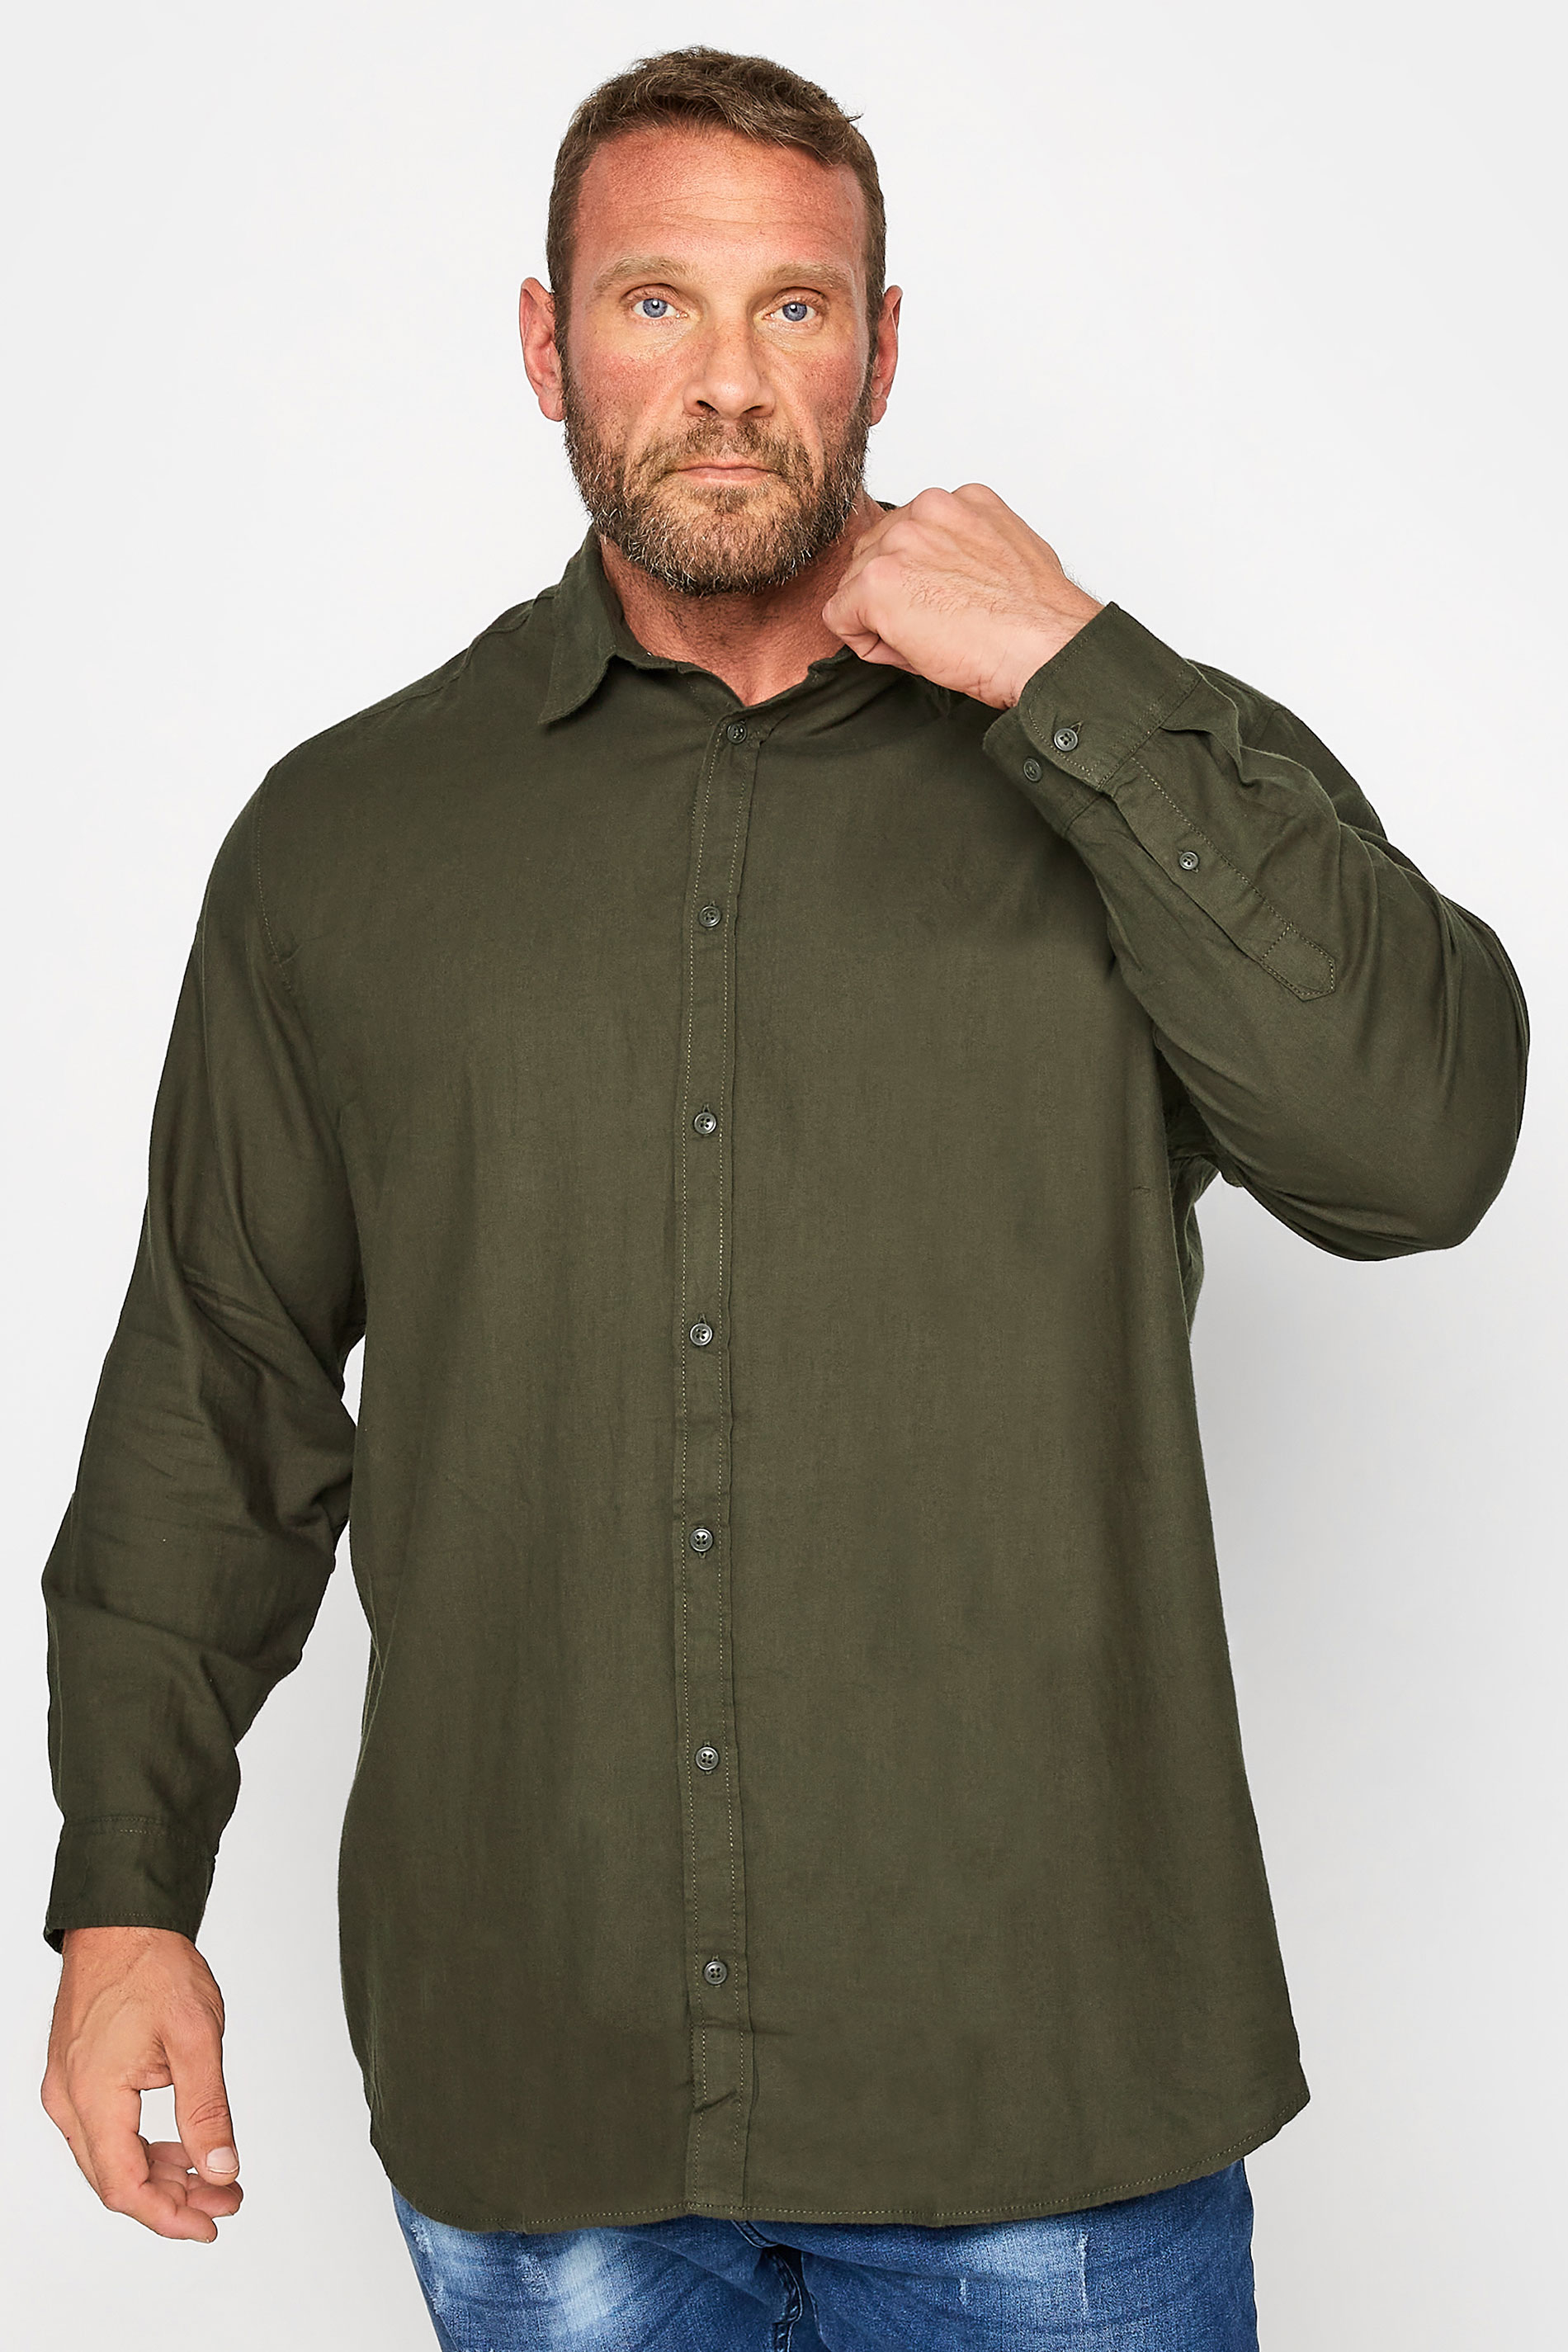 JACK & JONES Big & Tall Khaki Green Cotton Shirt 1